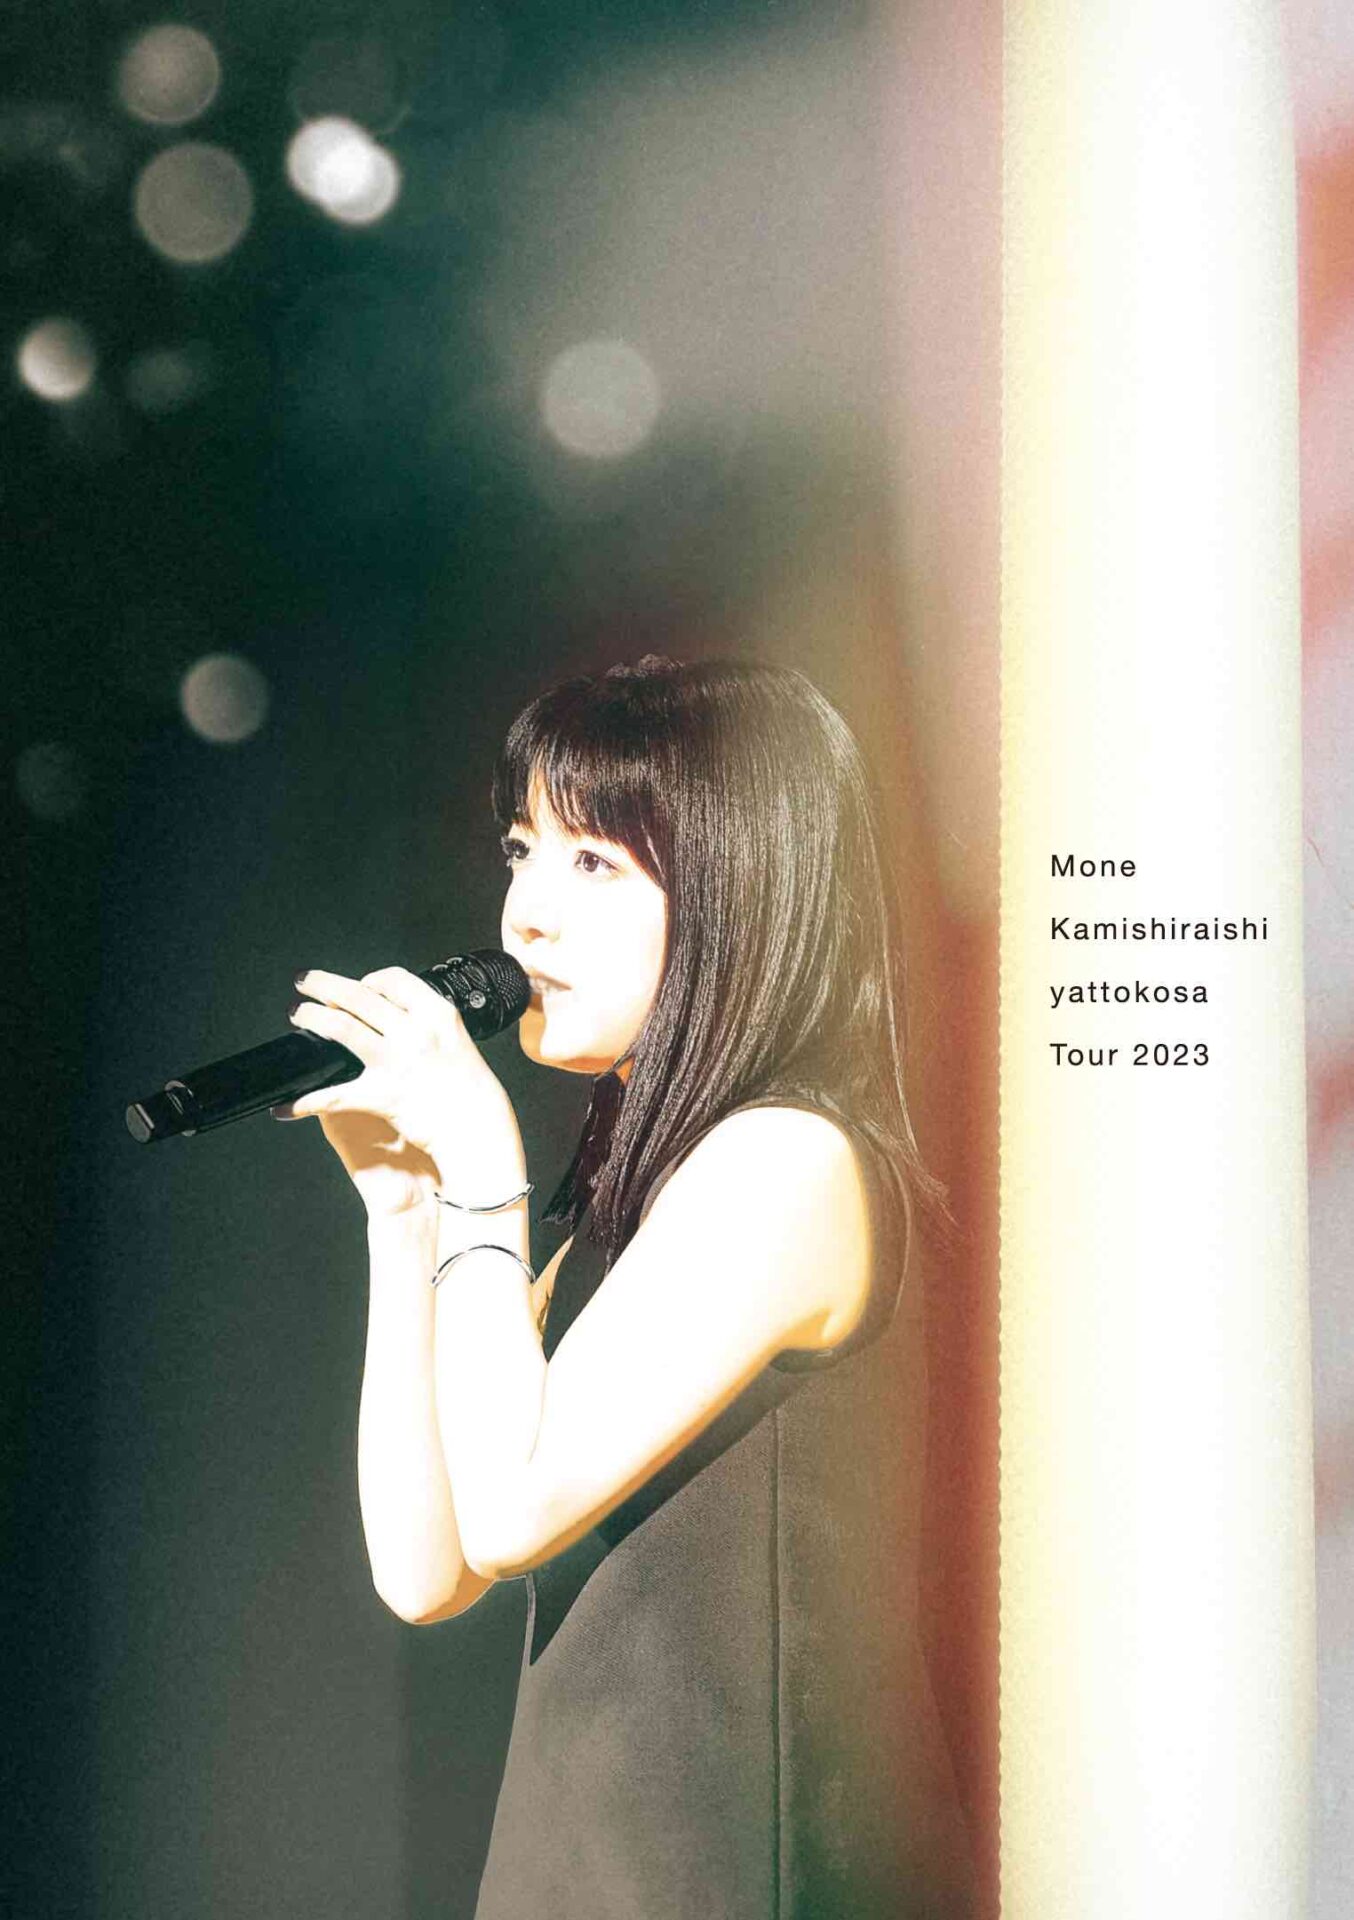 「Mone Kamishiraisihi『yattokosa』Tour 2023」ジャケット